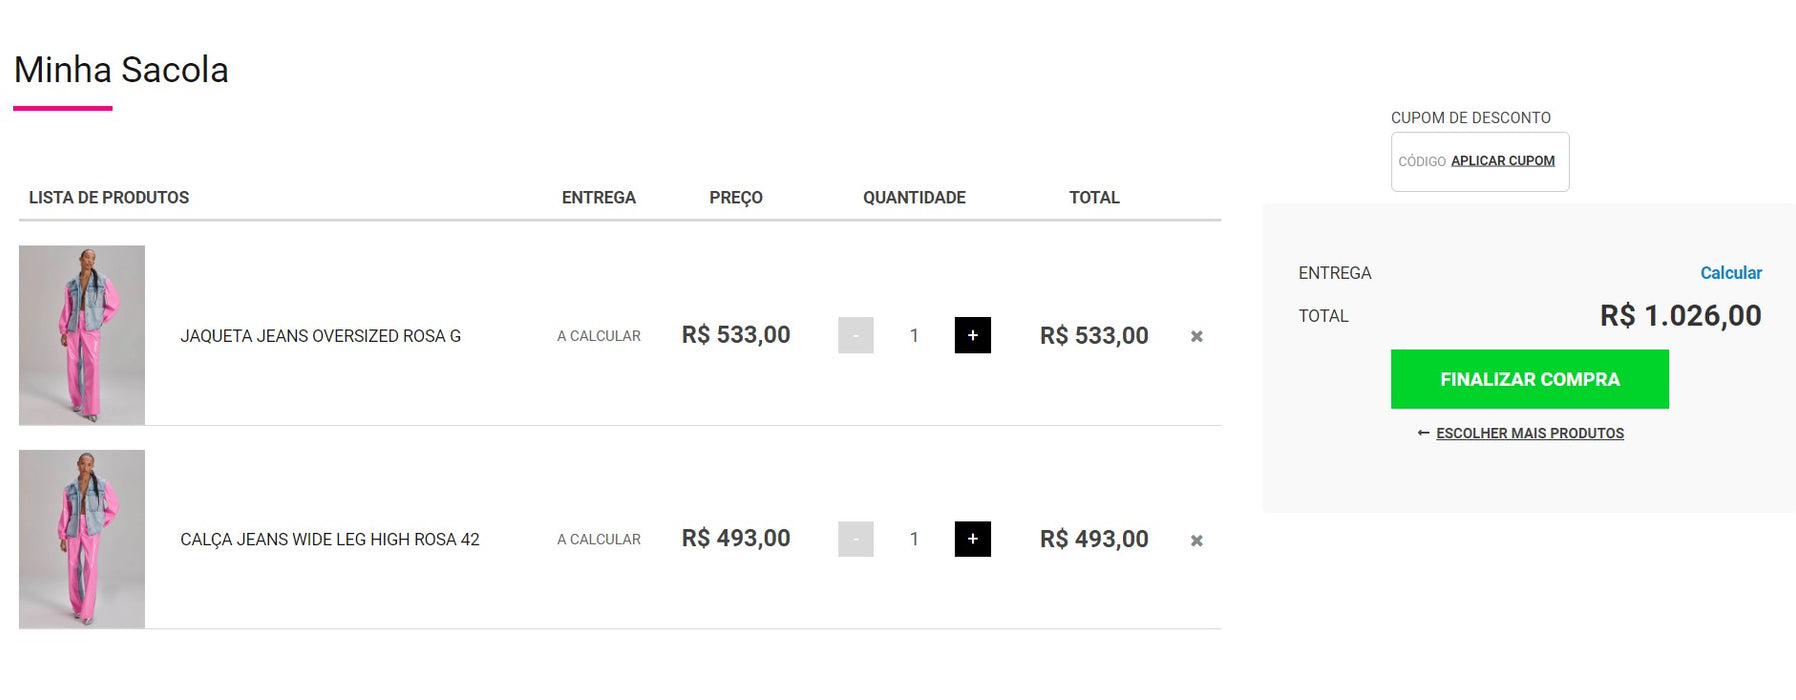 Personal Shopper | Buy from Brazil - Set clothes - 4 items - DDP- MKPBR - Brazilian Brands Worldwide